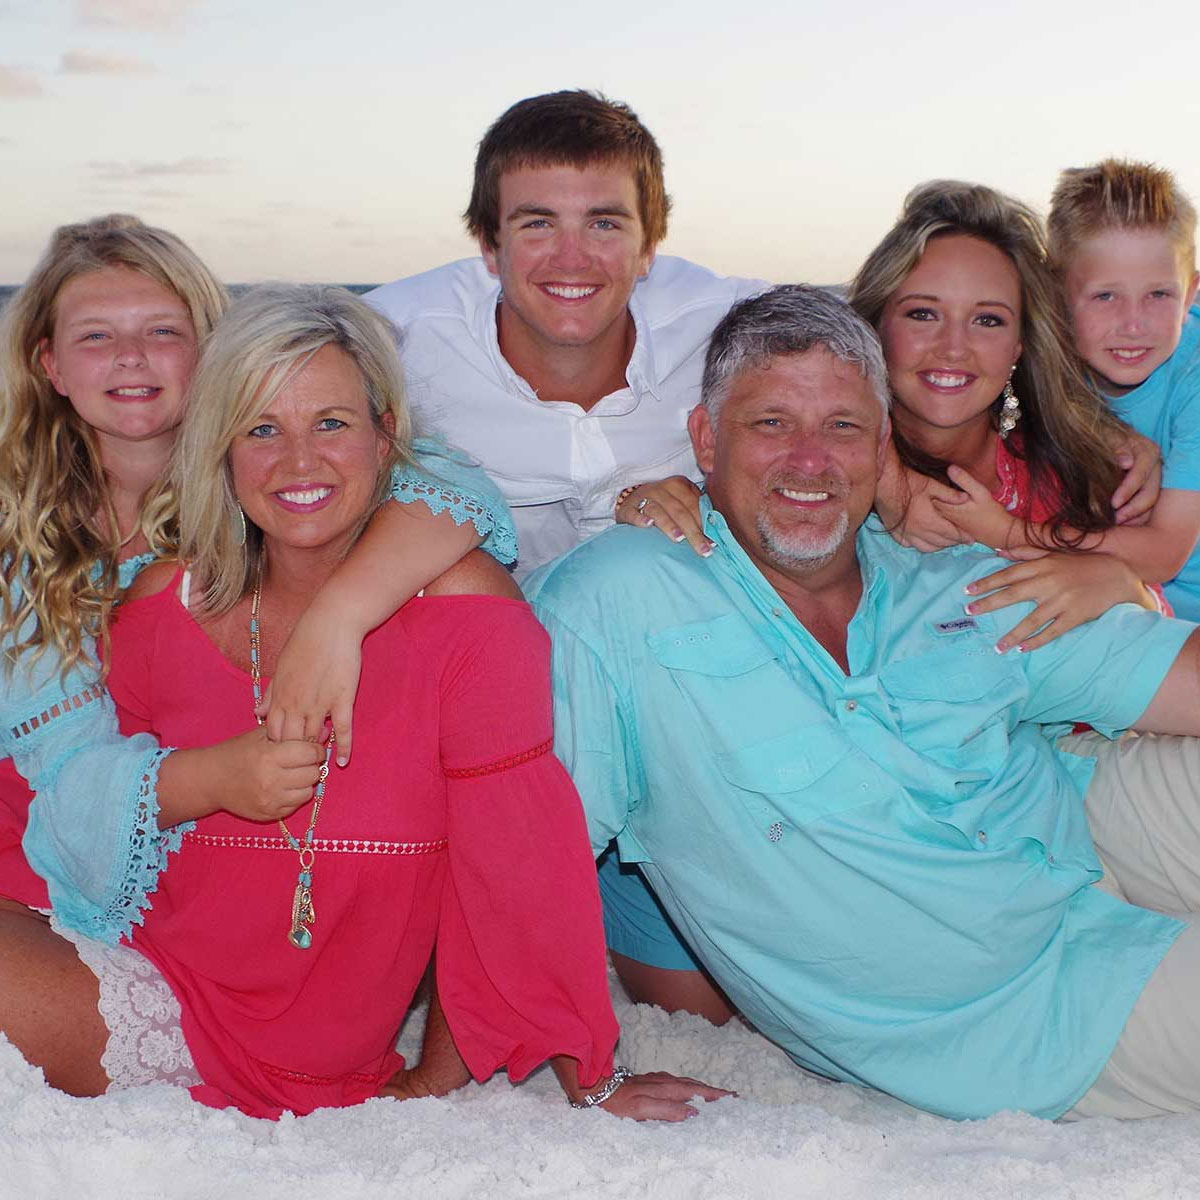 Best Beach Family Photoshoot Ideas || Family Photoshoot Poses at Beach ||  Family Photo Poses at Sea - YouTube